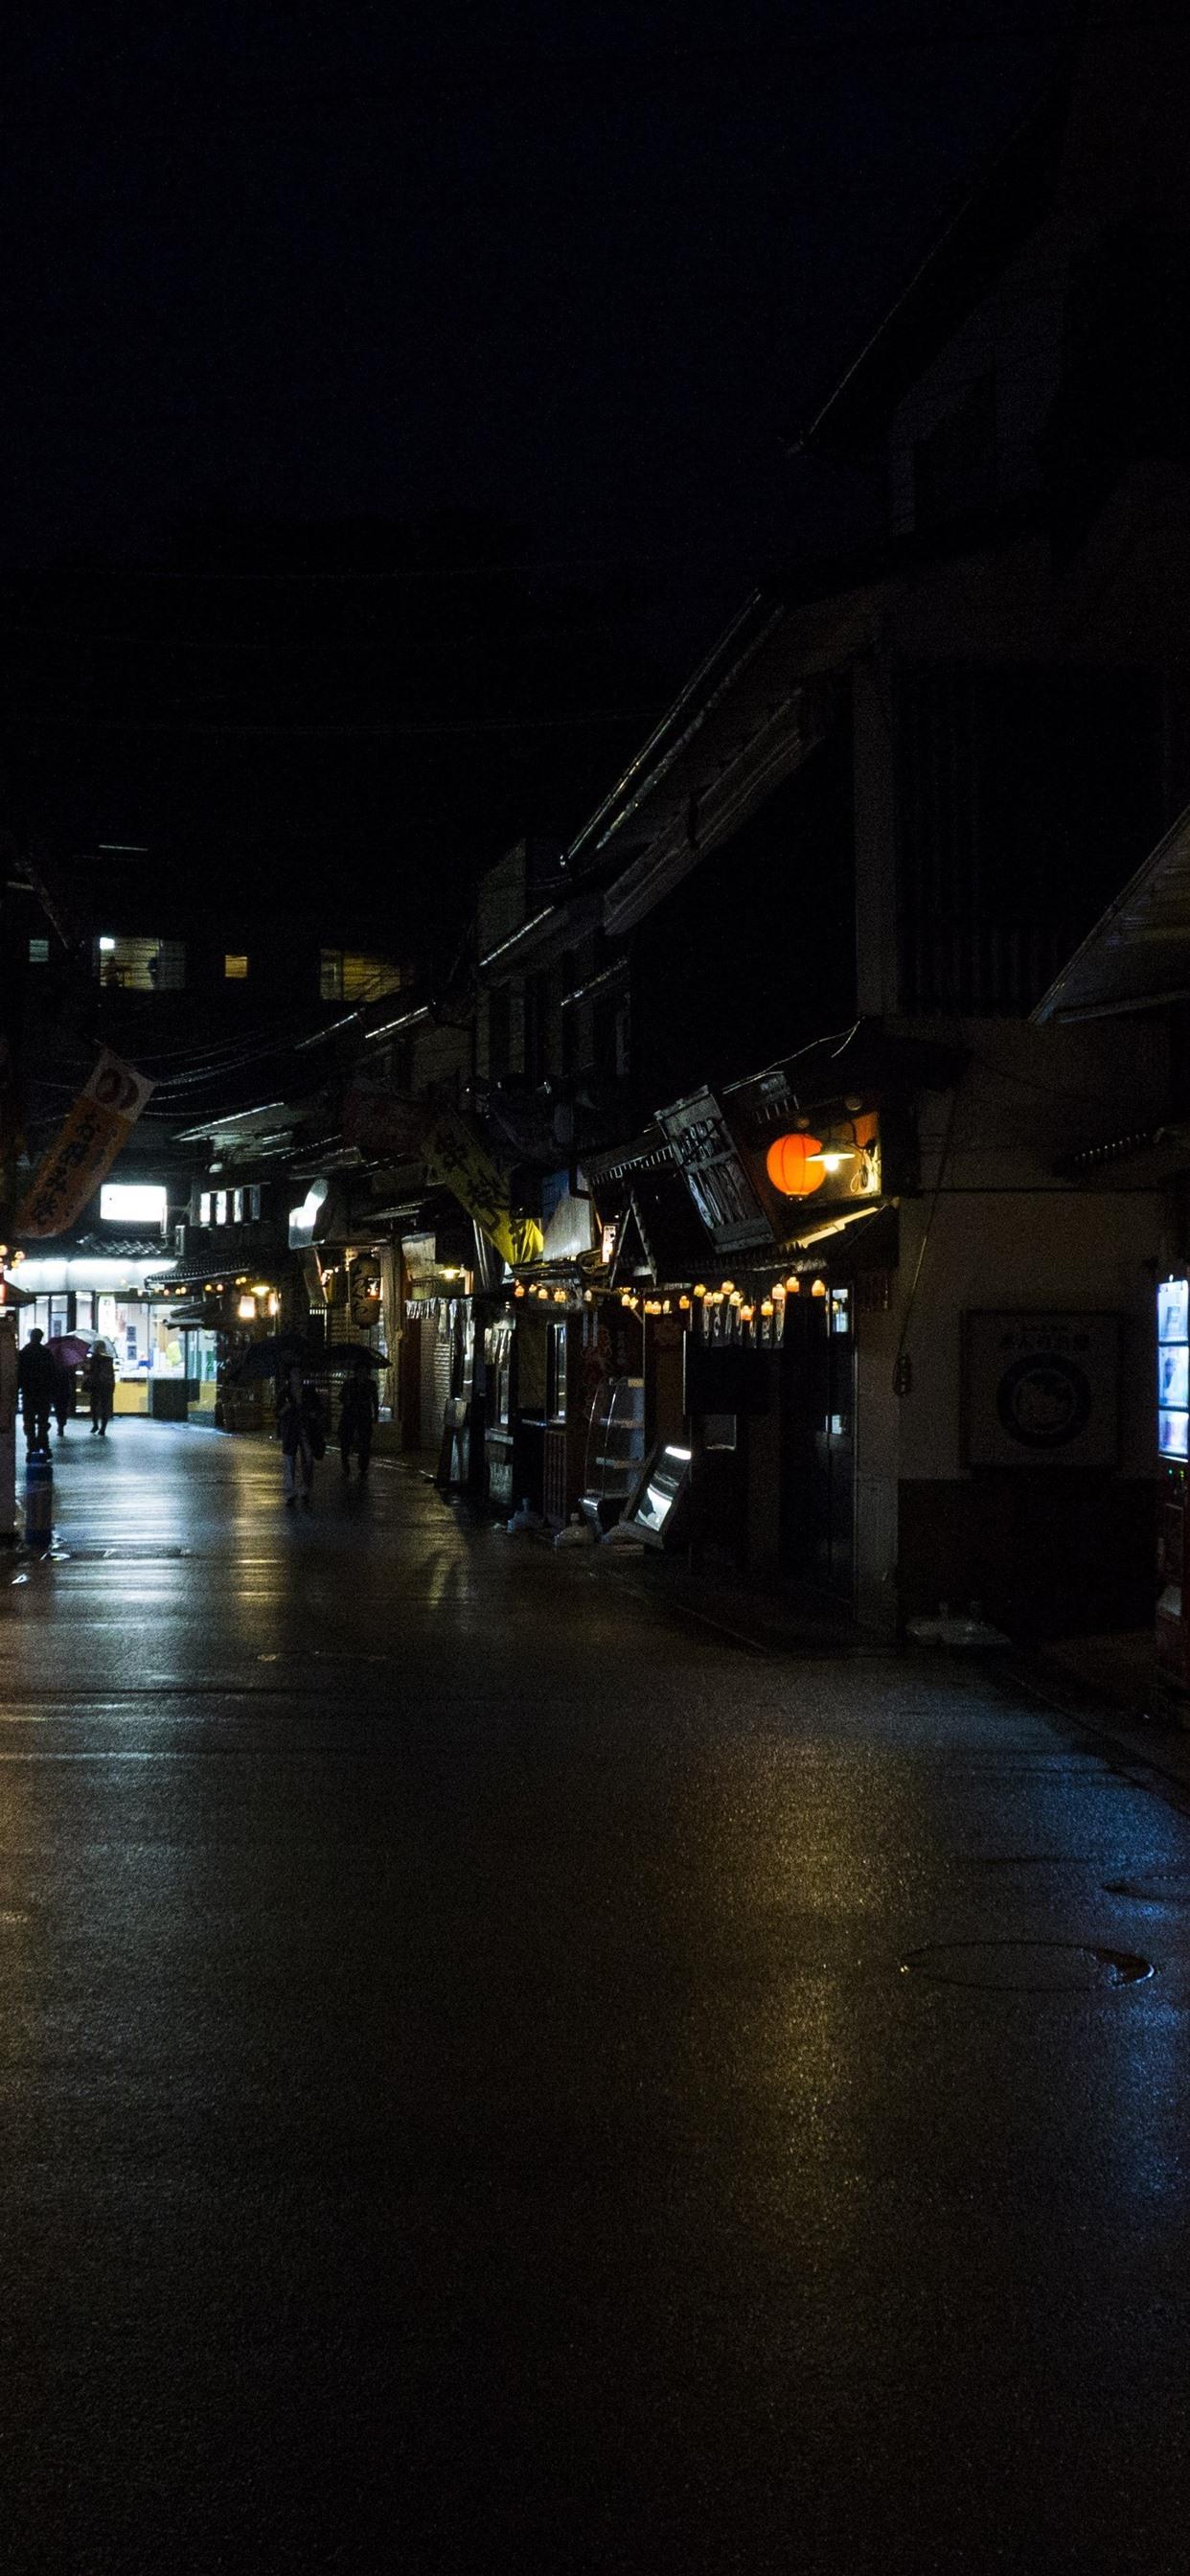 Itsukushima, Japan, city night, street, lanterns 1242x2688 iPhone XS